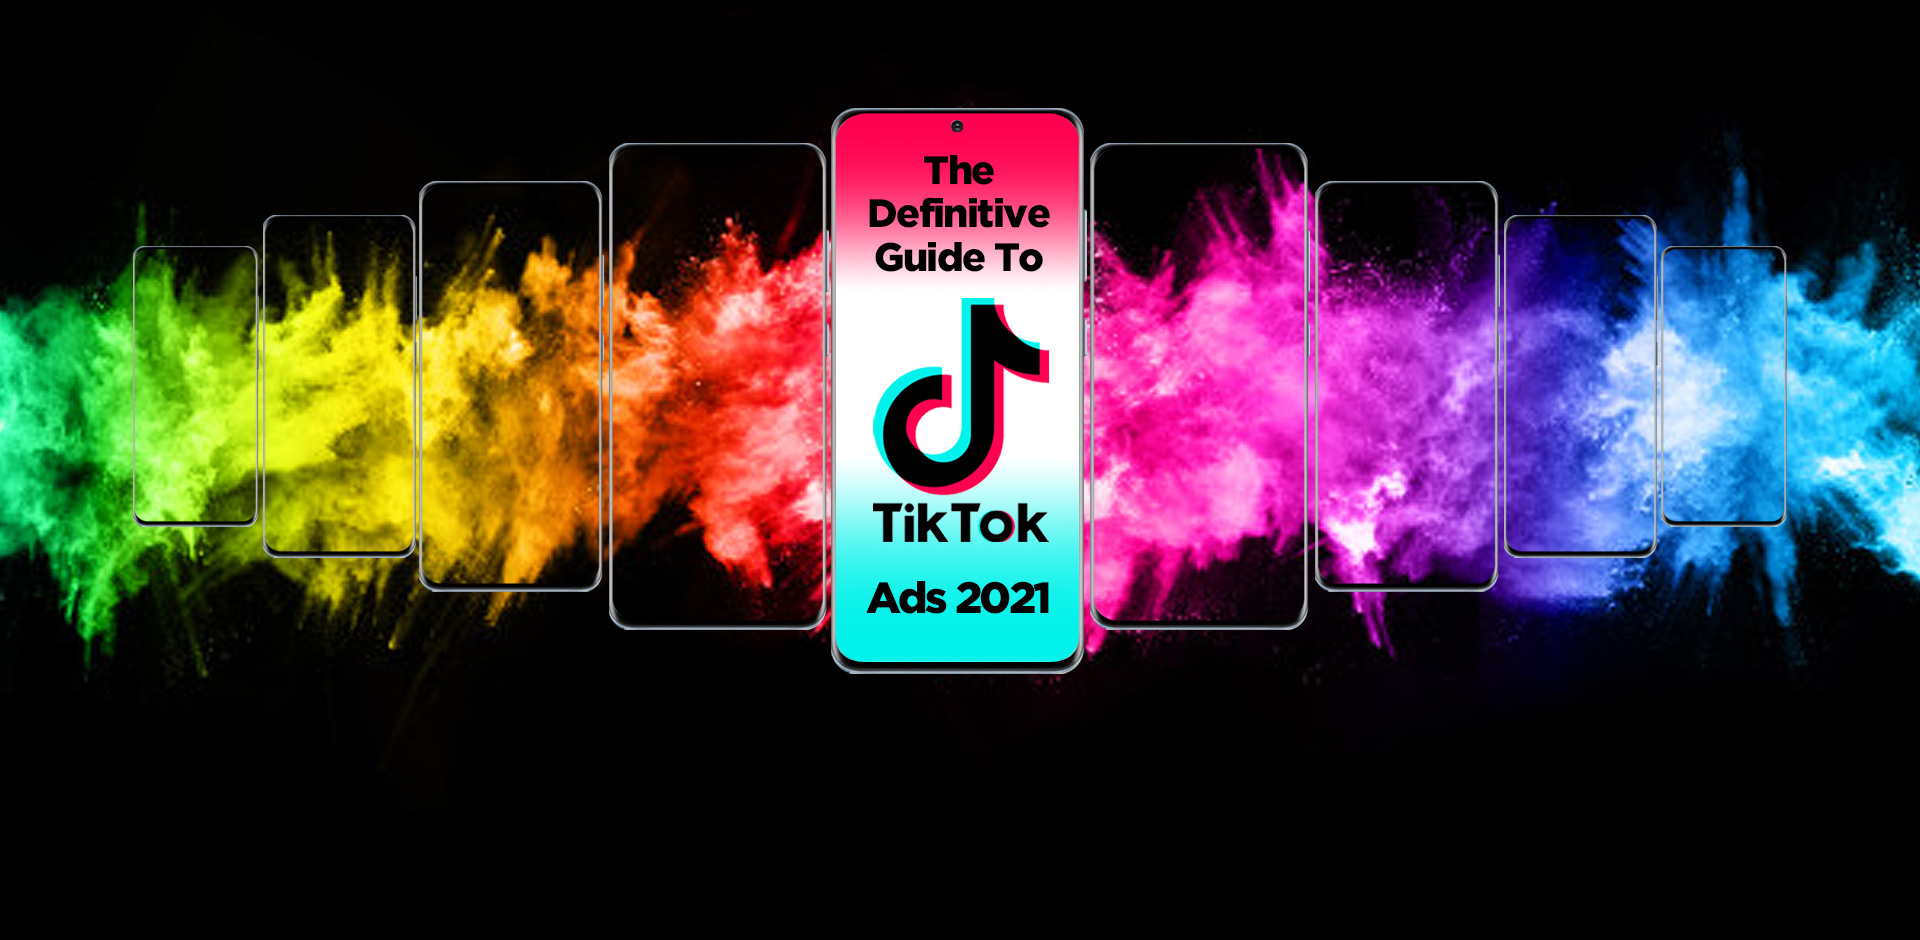 The Definitive Guide to TikTok Ads 2021